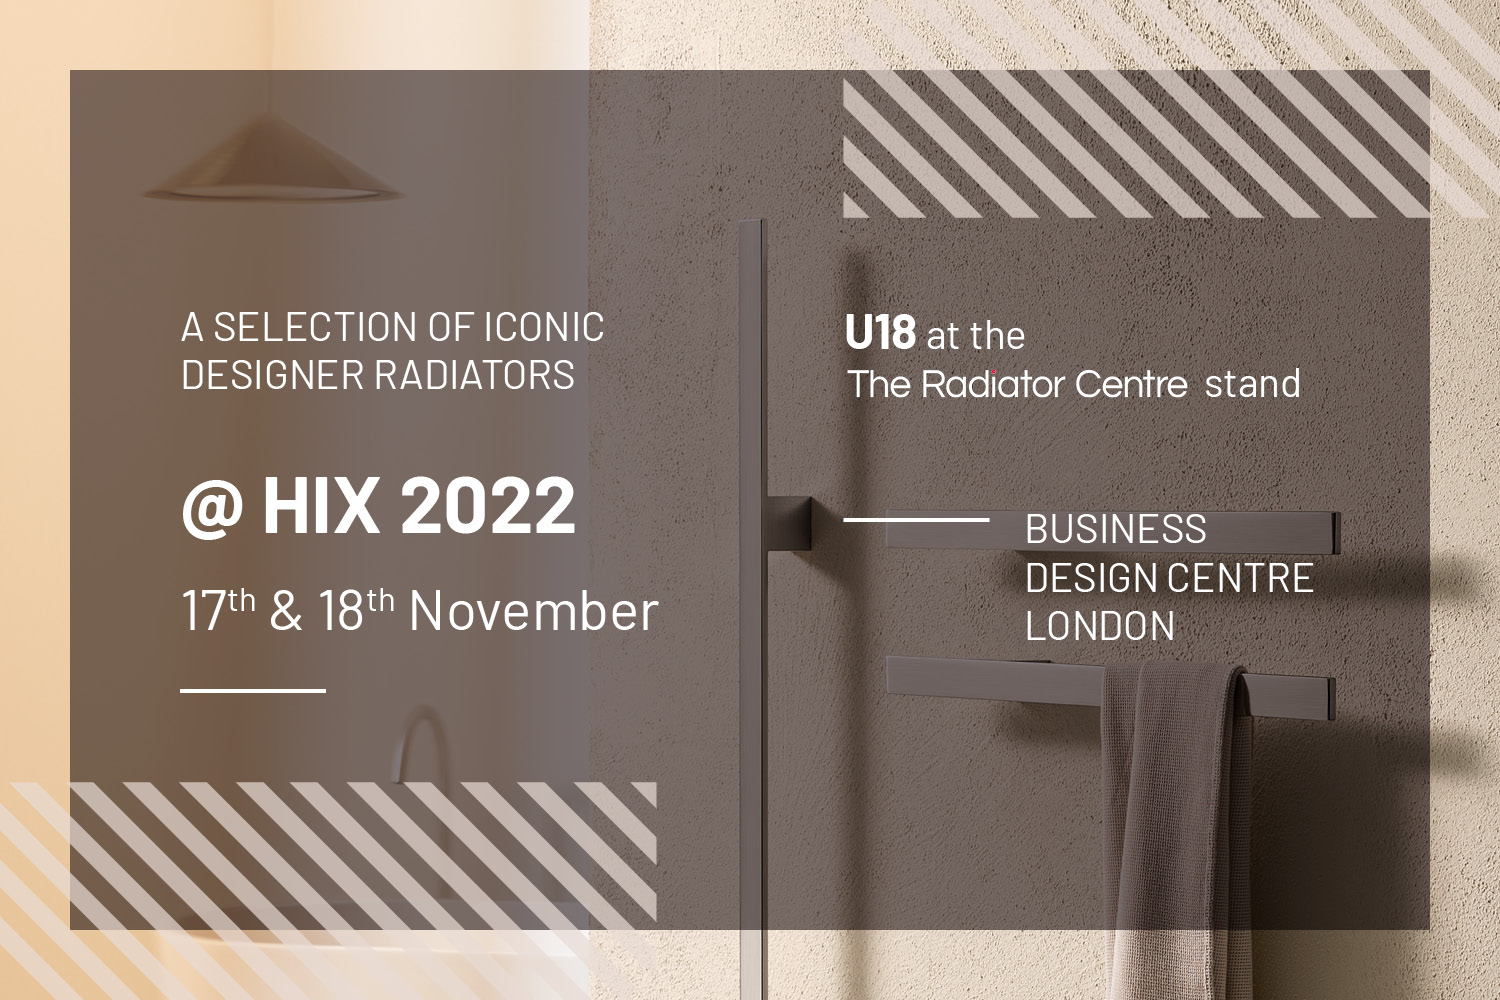 Tubes @ HIX 2022 in London-TUBES_HIX LONDRA_1500x1000 Gallery News 2_2022